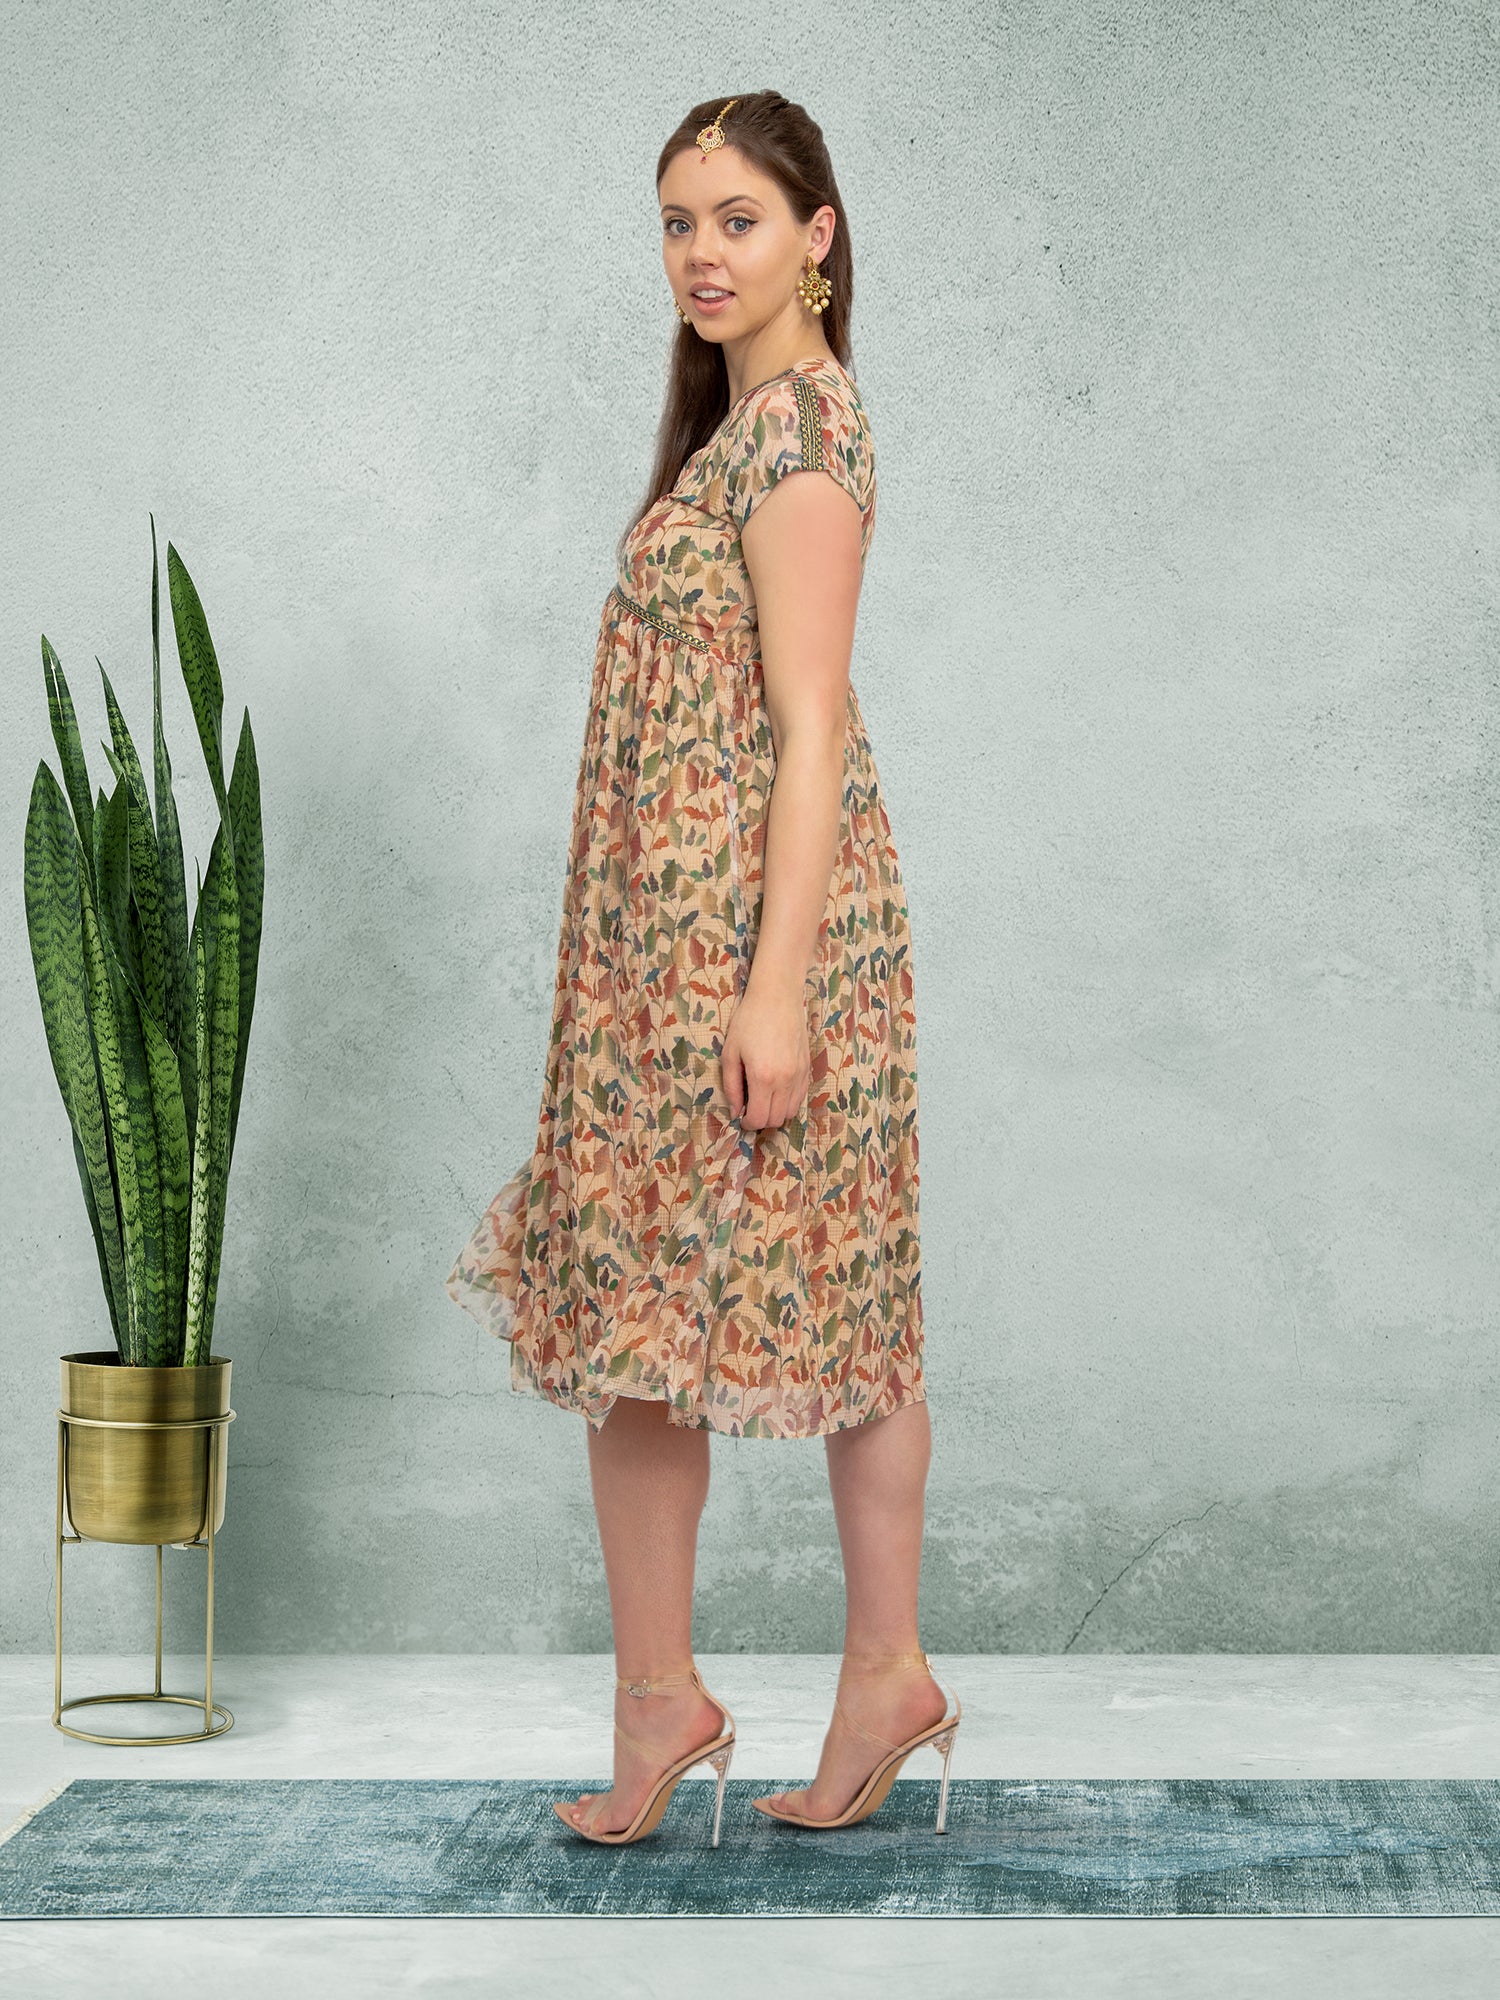 Harmony Hues - Cream Color Knee Length Dress